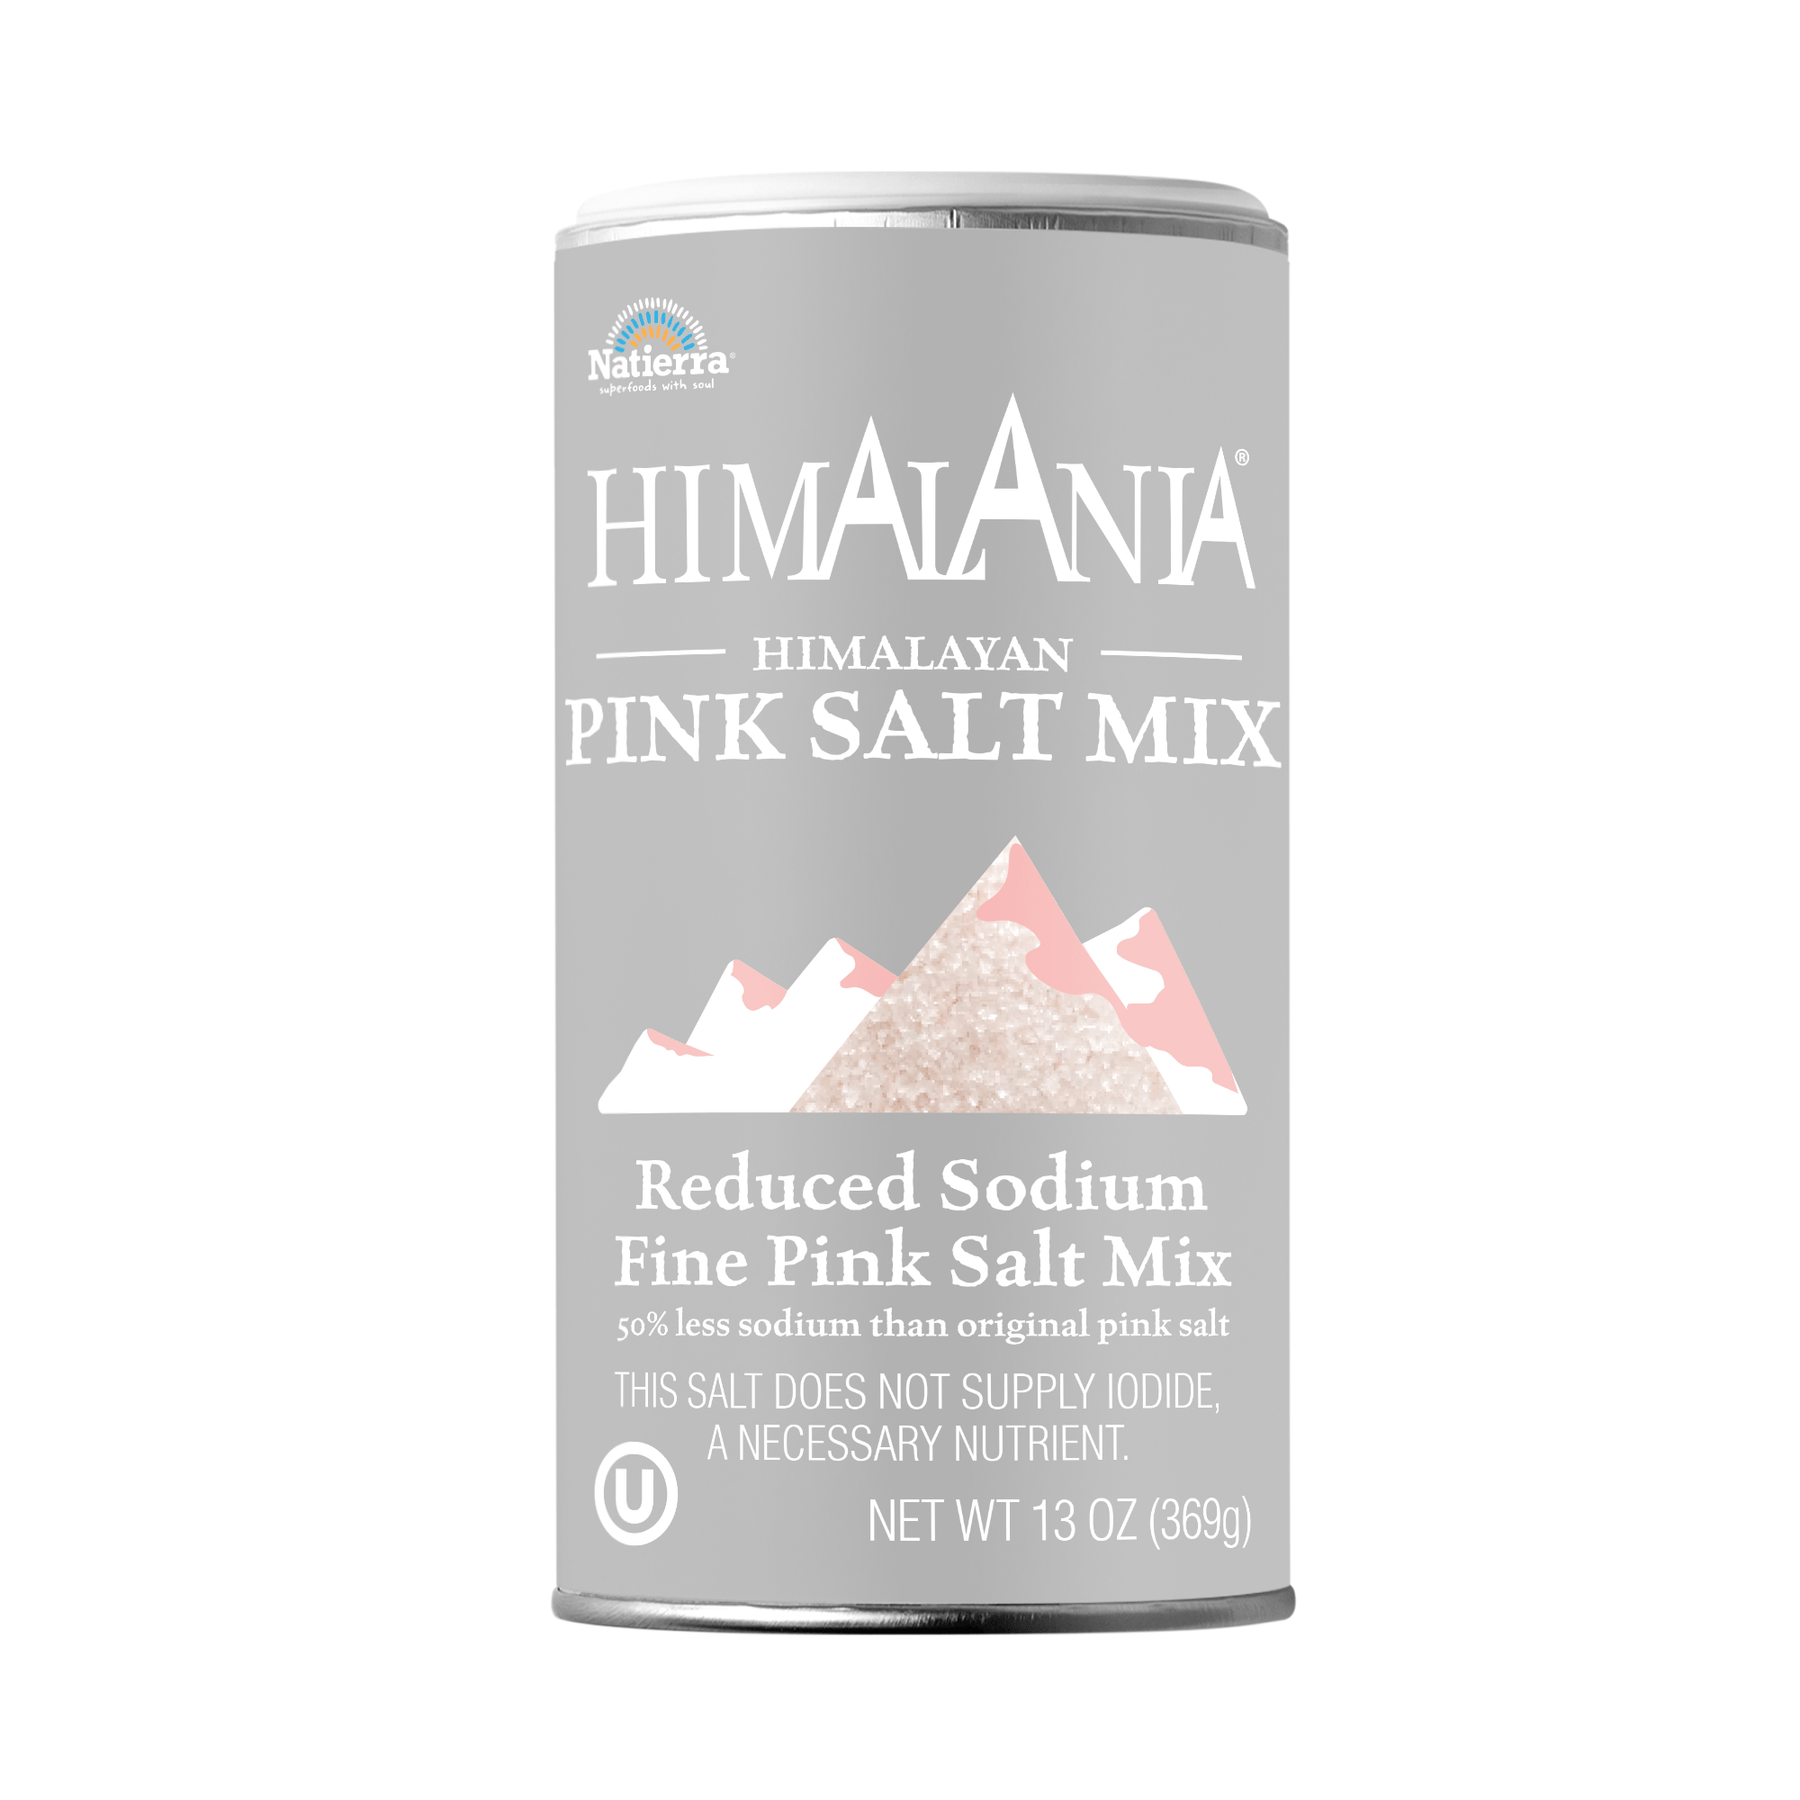 Natierra Himalania Reduced Sodium Fine Pink Salt  mix13 oz shaker